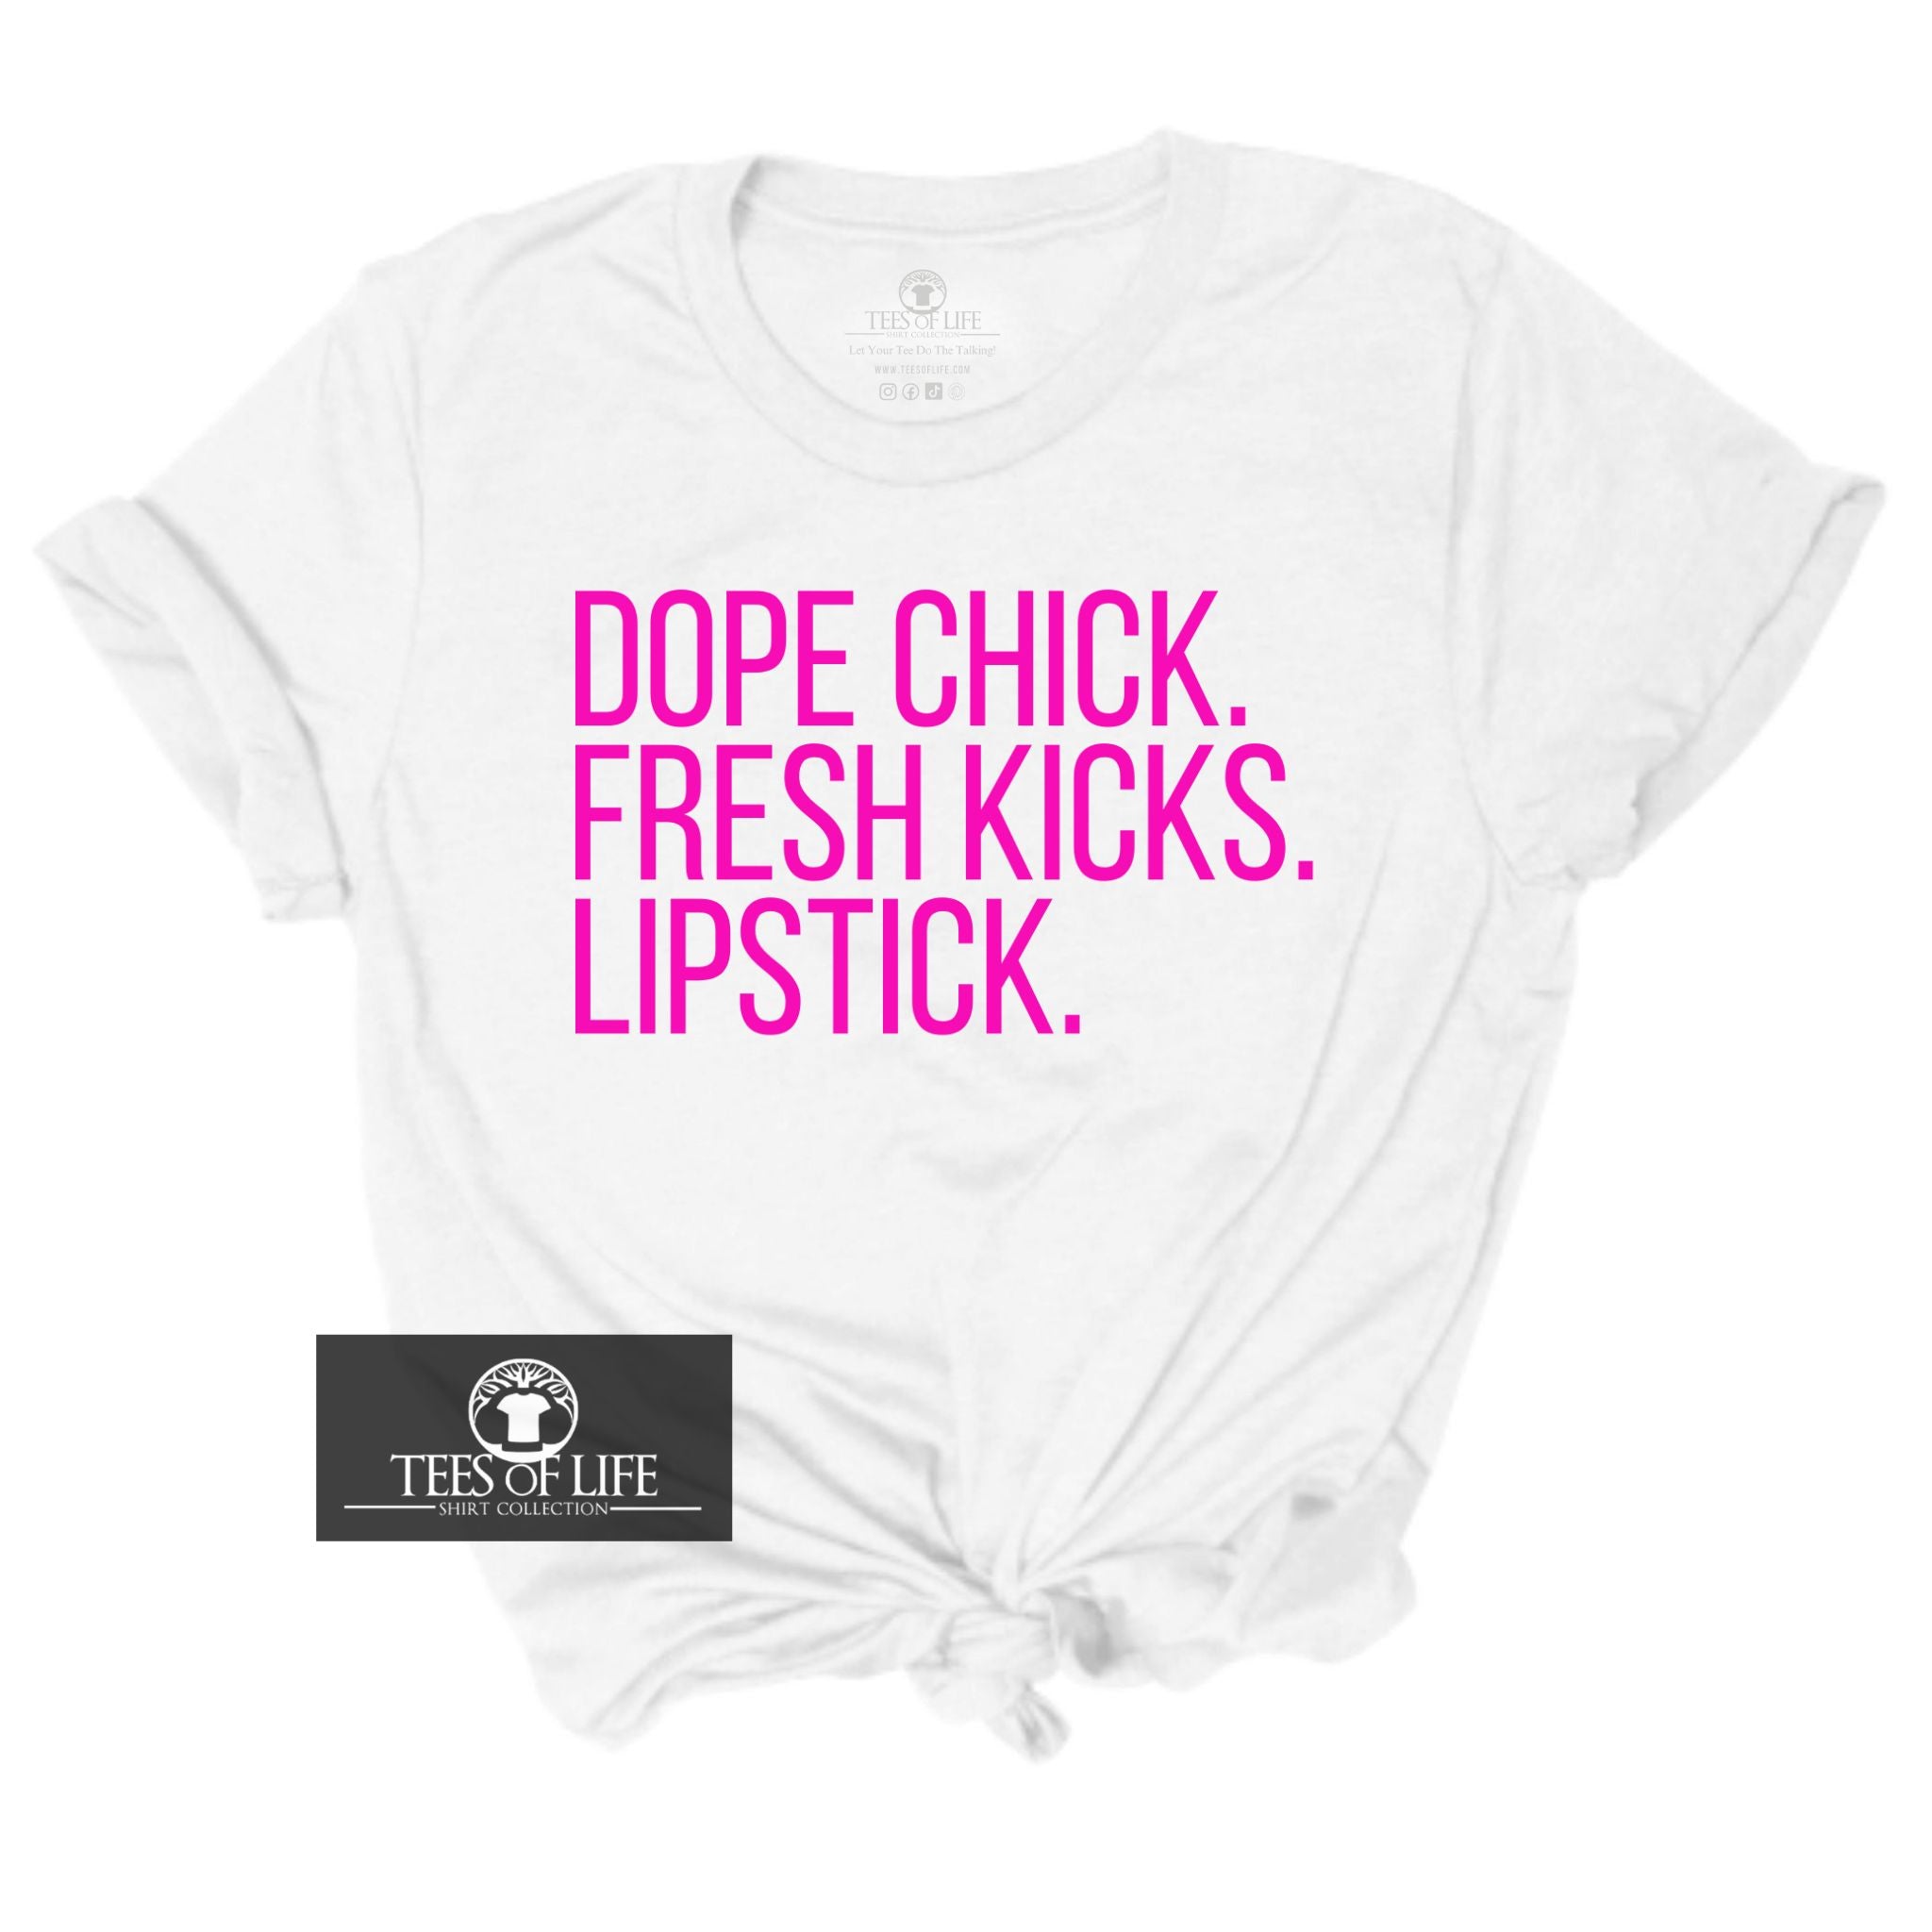 Dope Chick Fresh Kicks Lipstick Tee (Pink Letters)